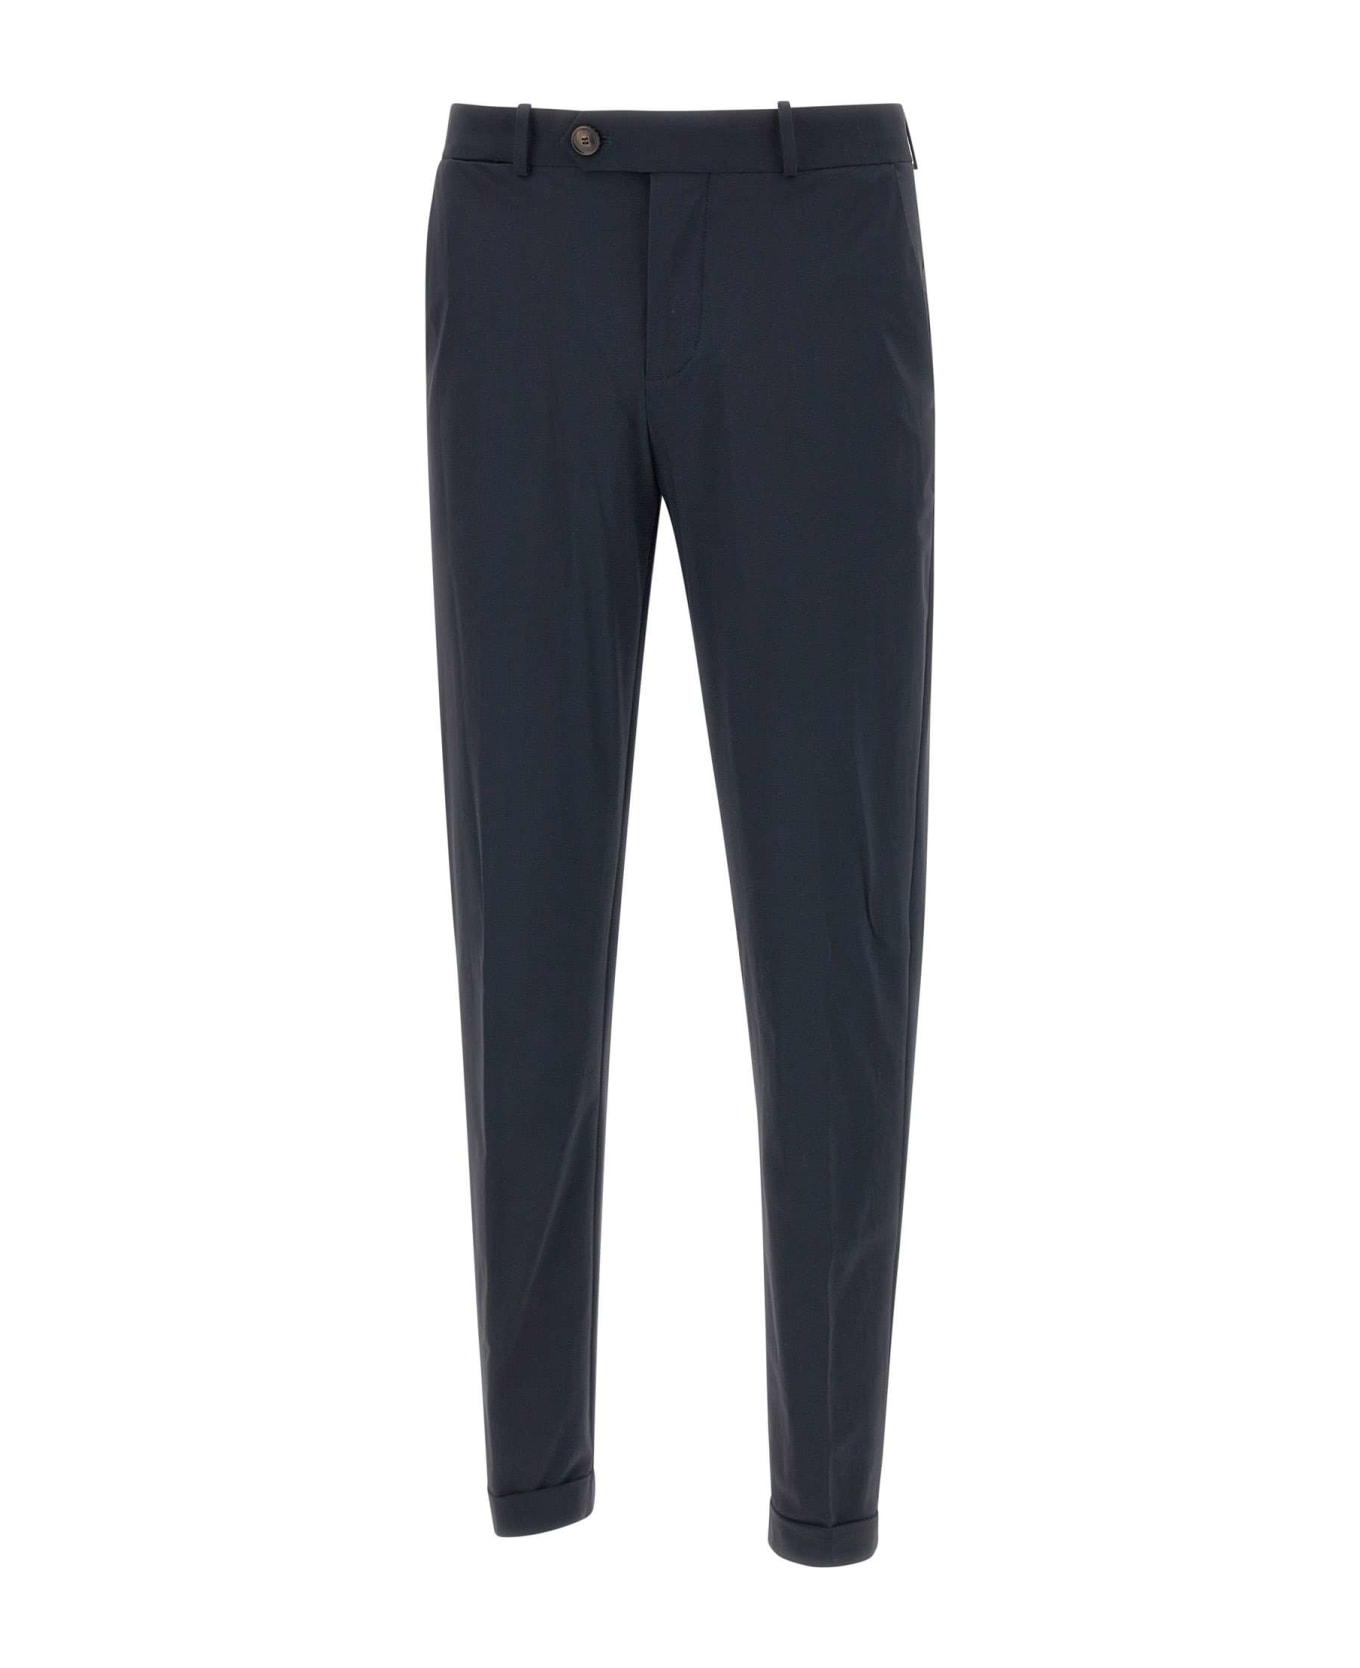 RRD - Roberto Ricci Design Men's Trousers 'revo Chino' Pants - BLUE BLACK ボトムス